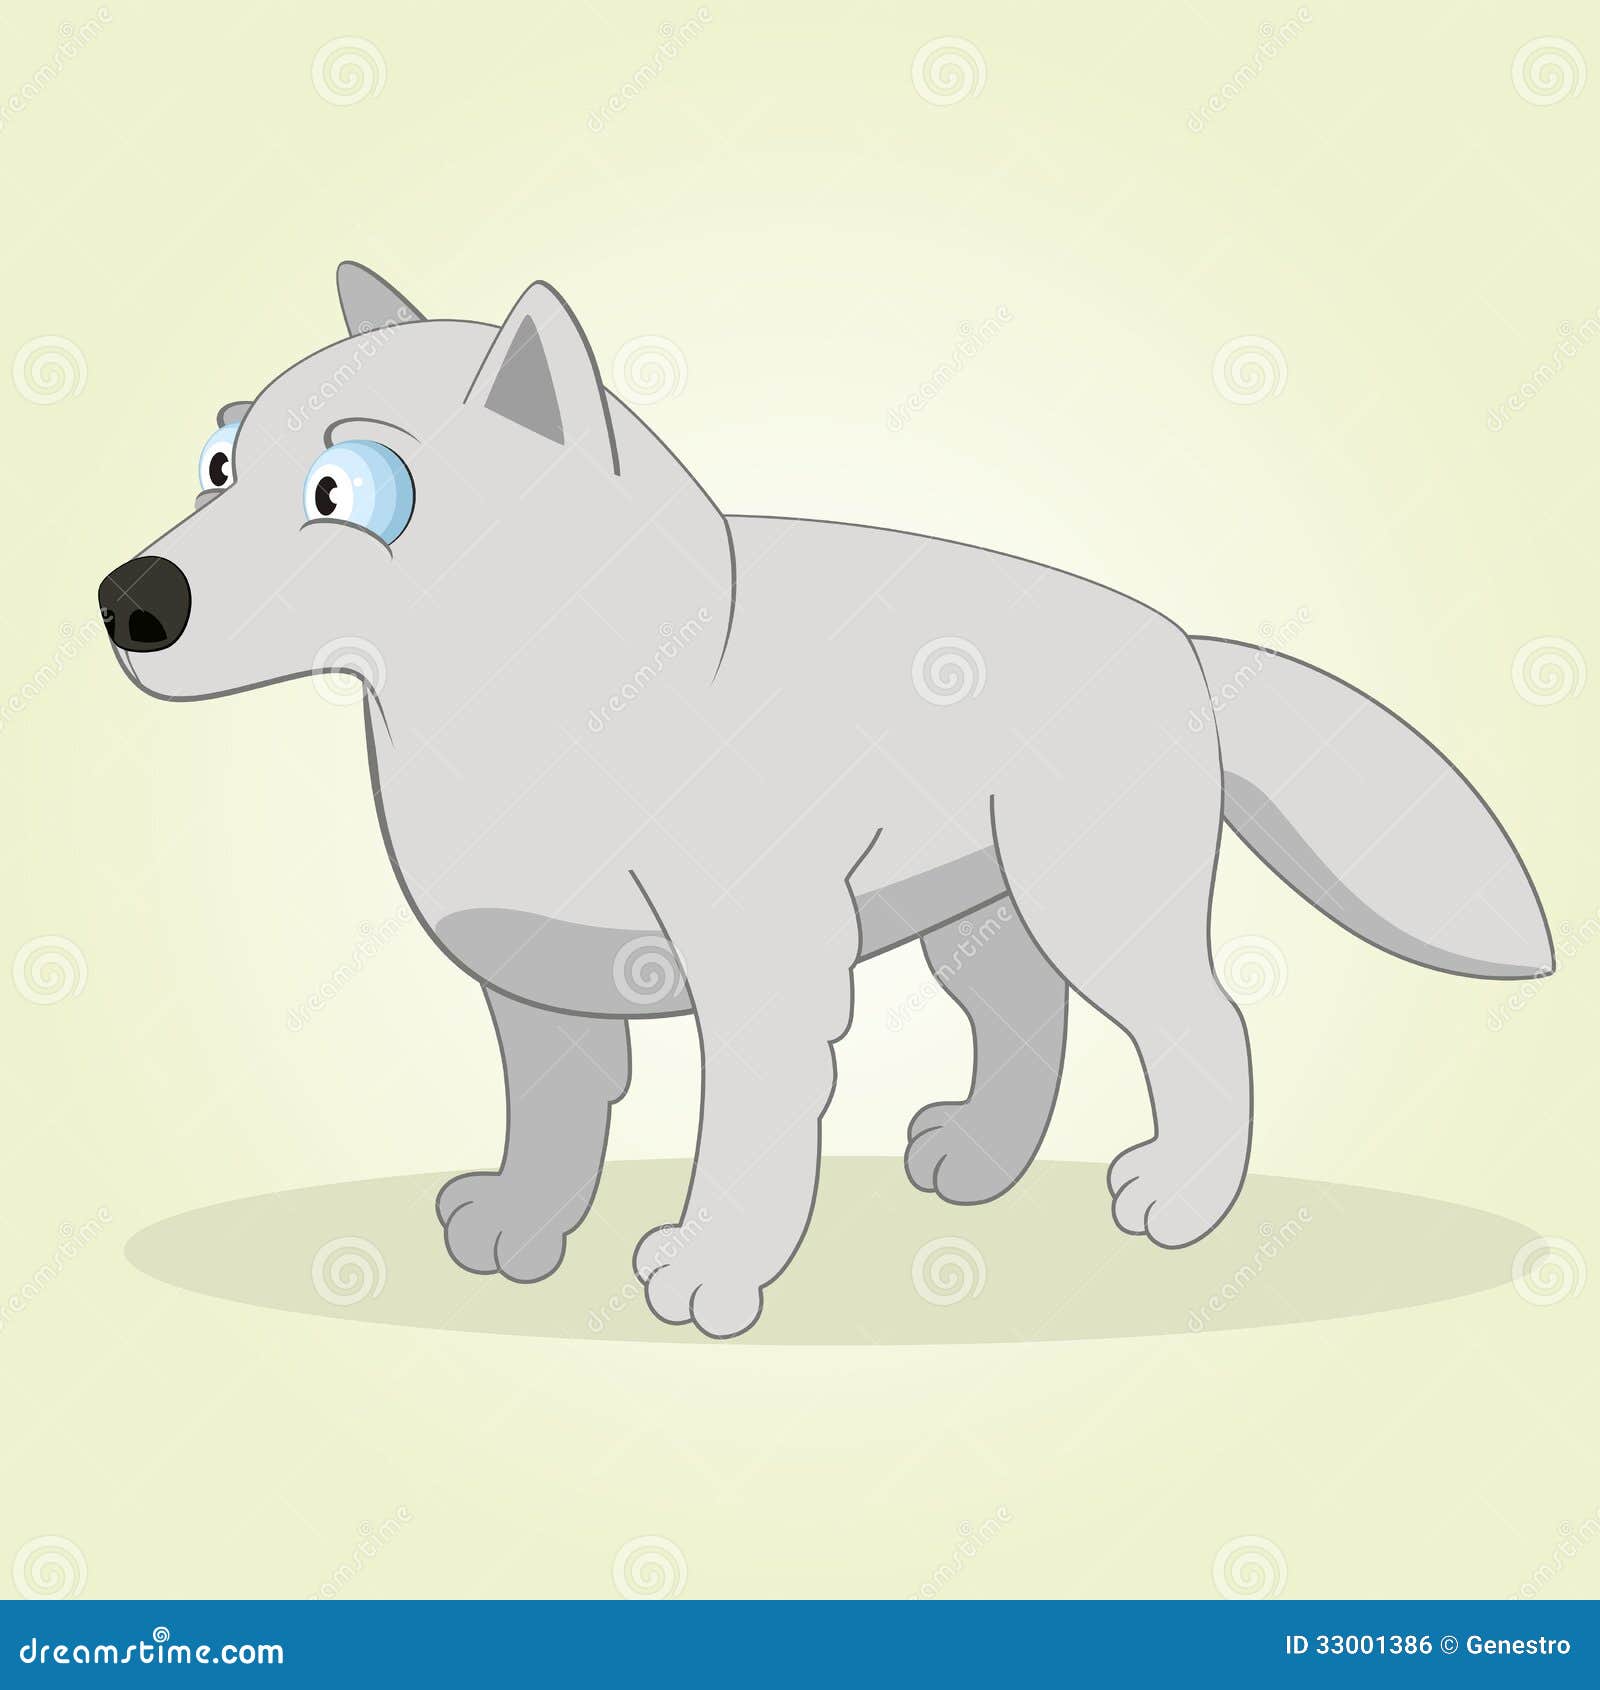 Arctic Wolf Royalty Free Stock Image - Image: 33001386